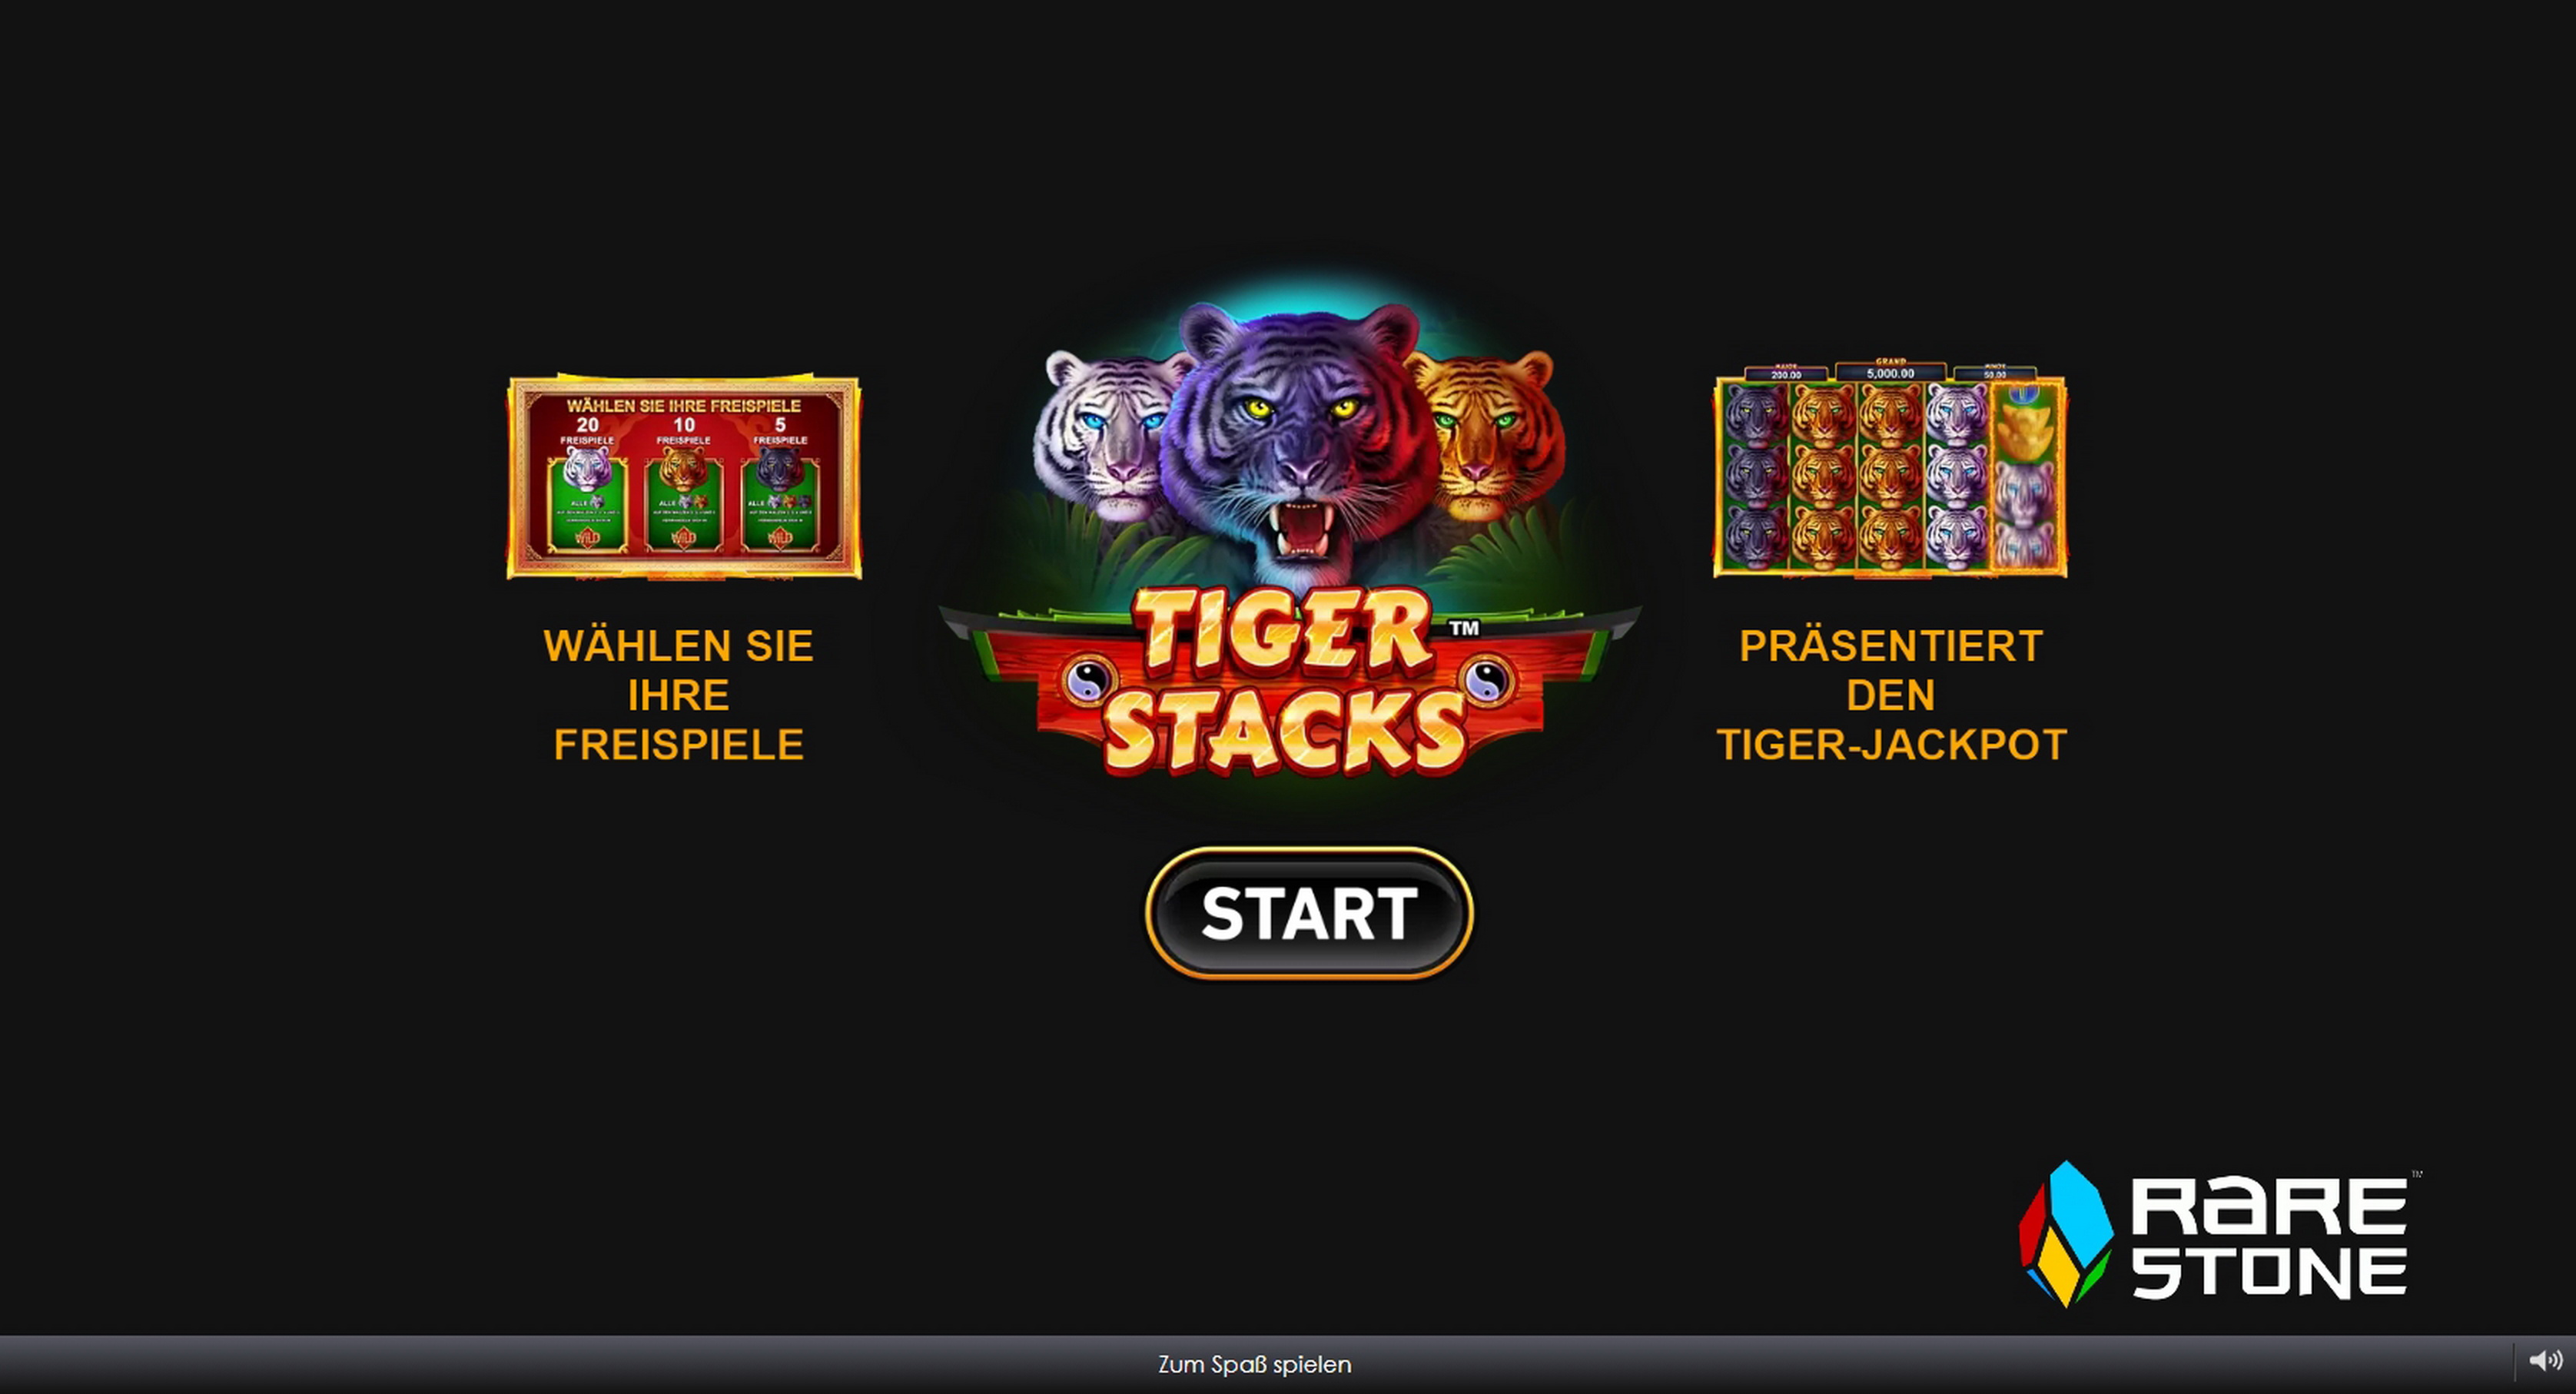 Play Tiger Stacks Free Casino Slot Game by Rarestone Gaming